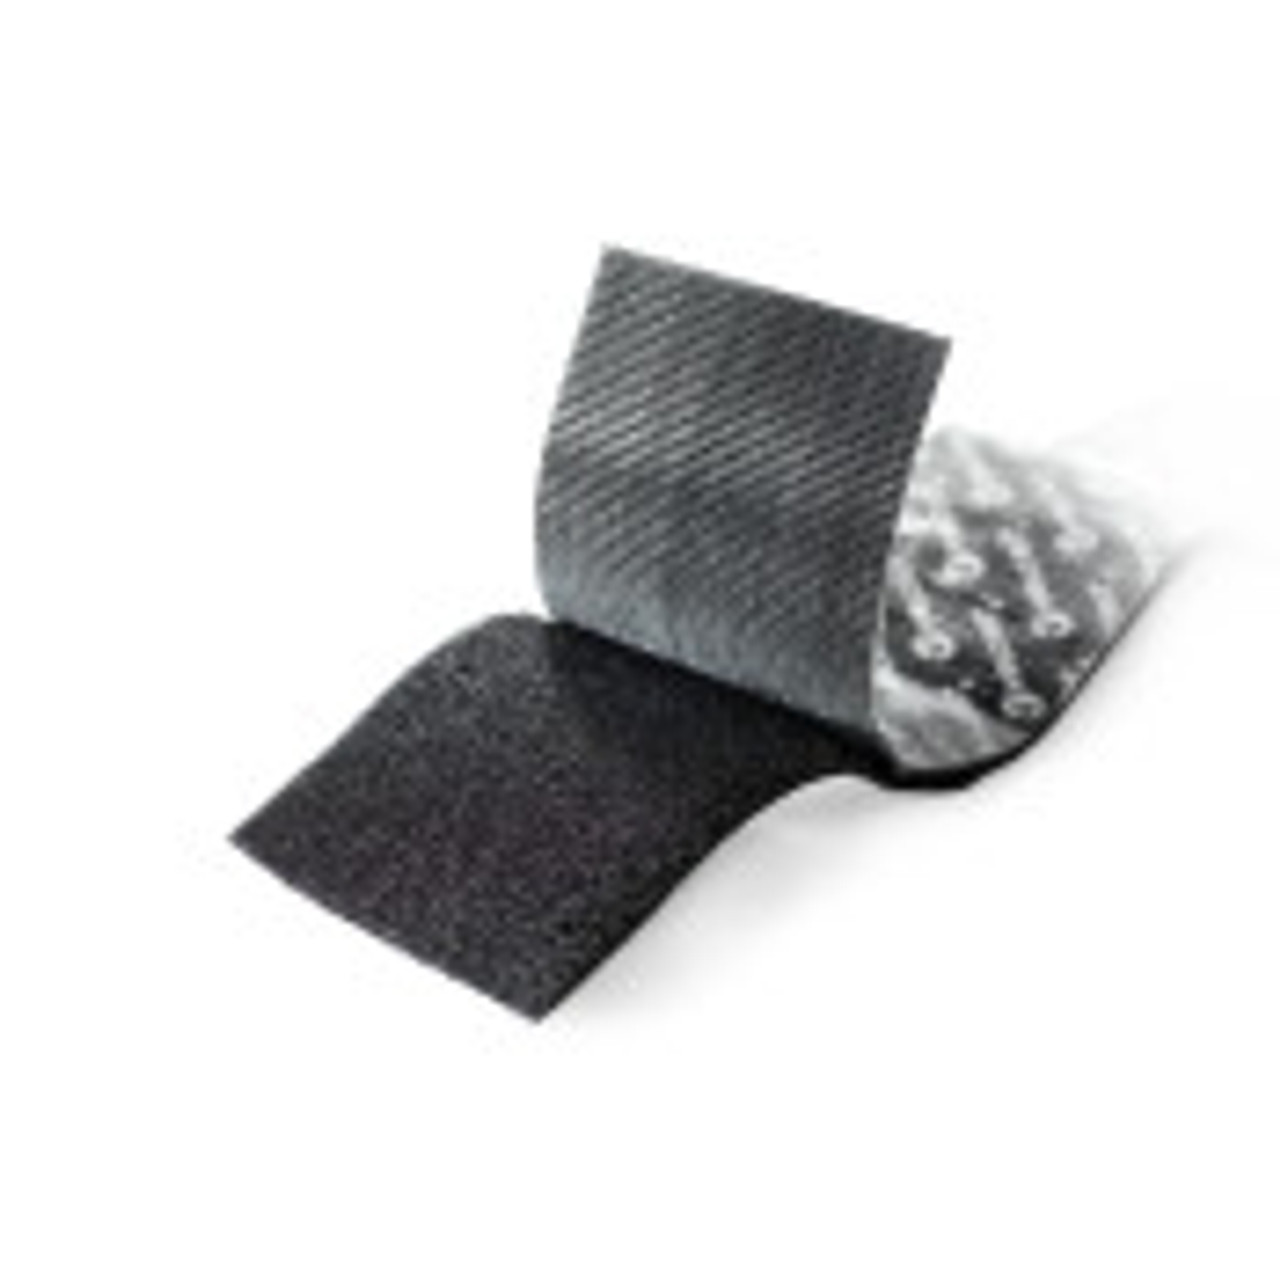 Velcro Industrial Strength 2 x 15' Black